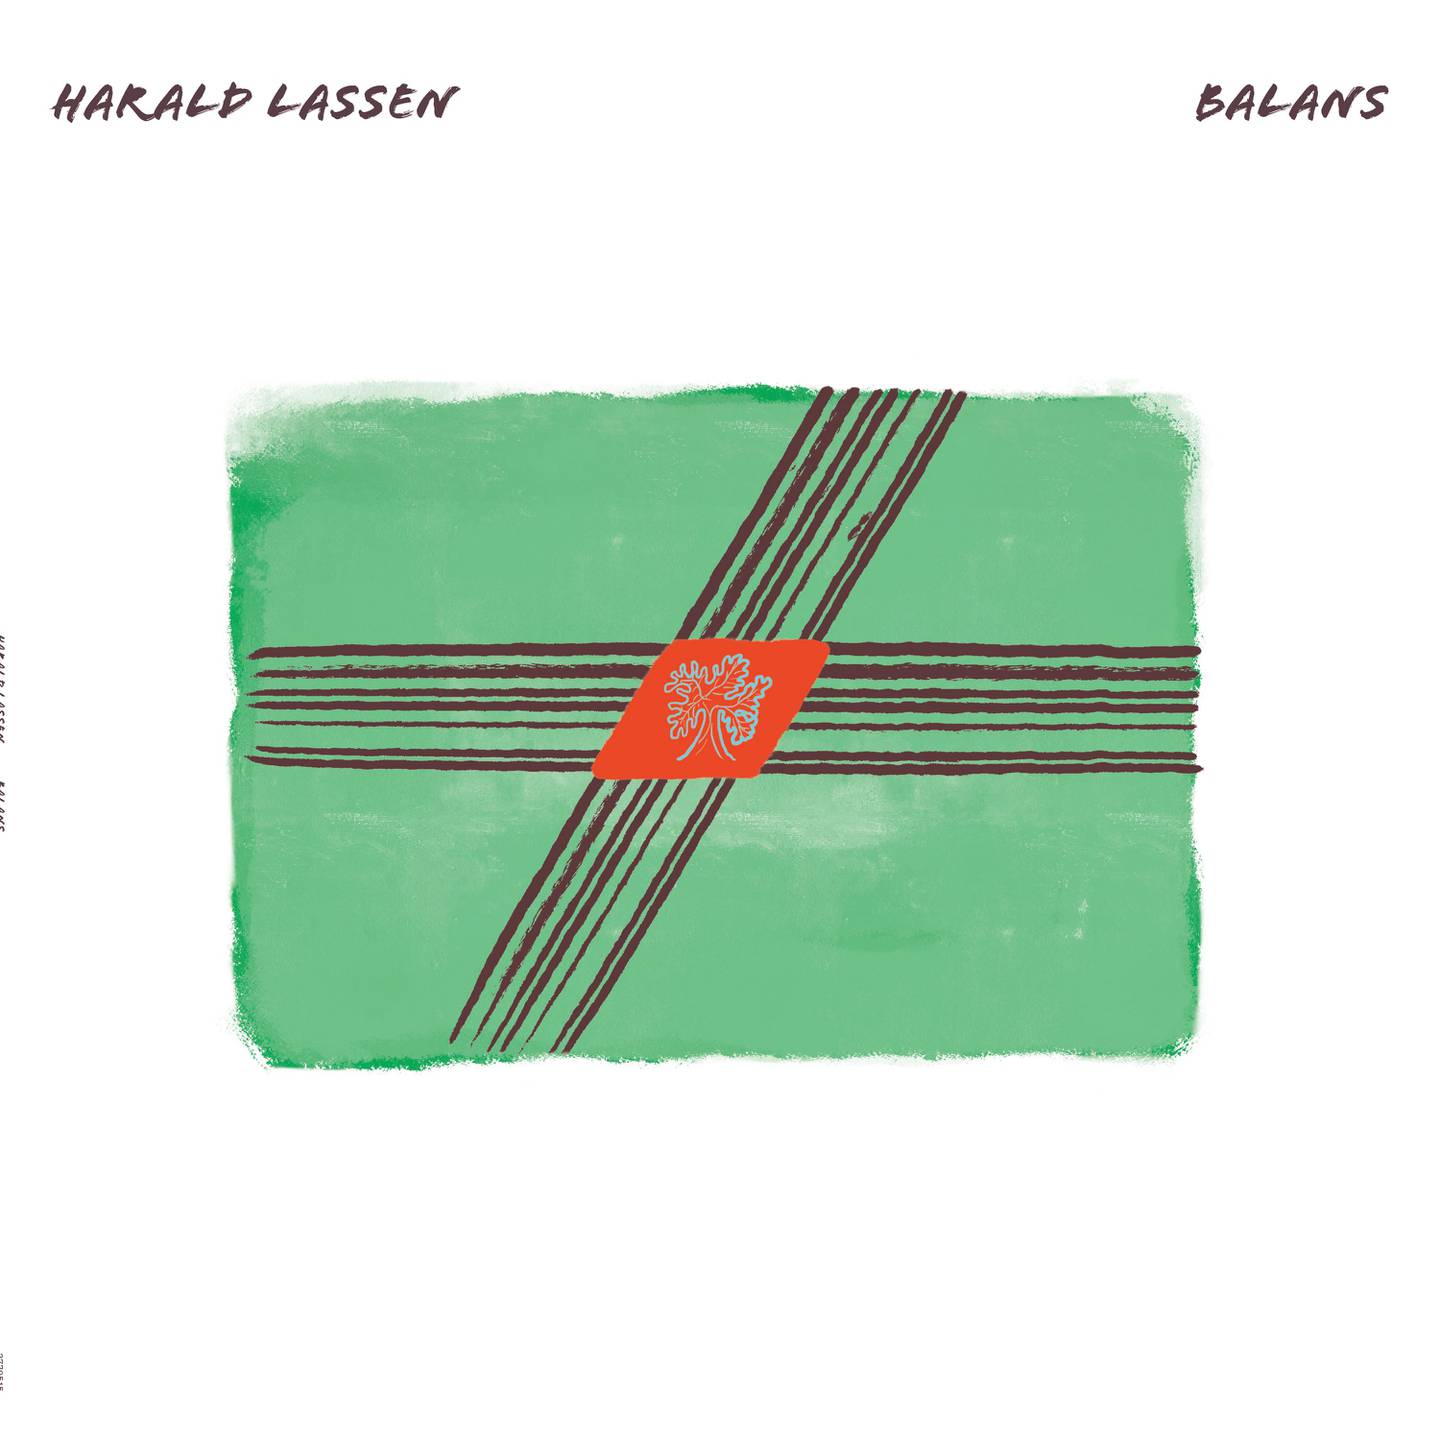 Harald Lassen: Balans